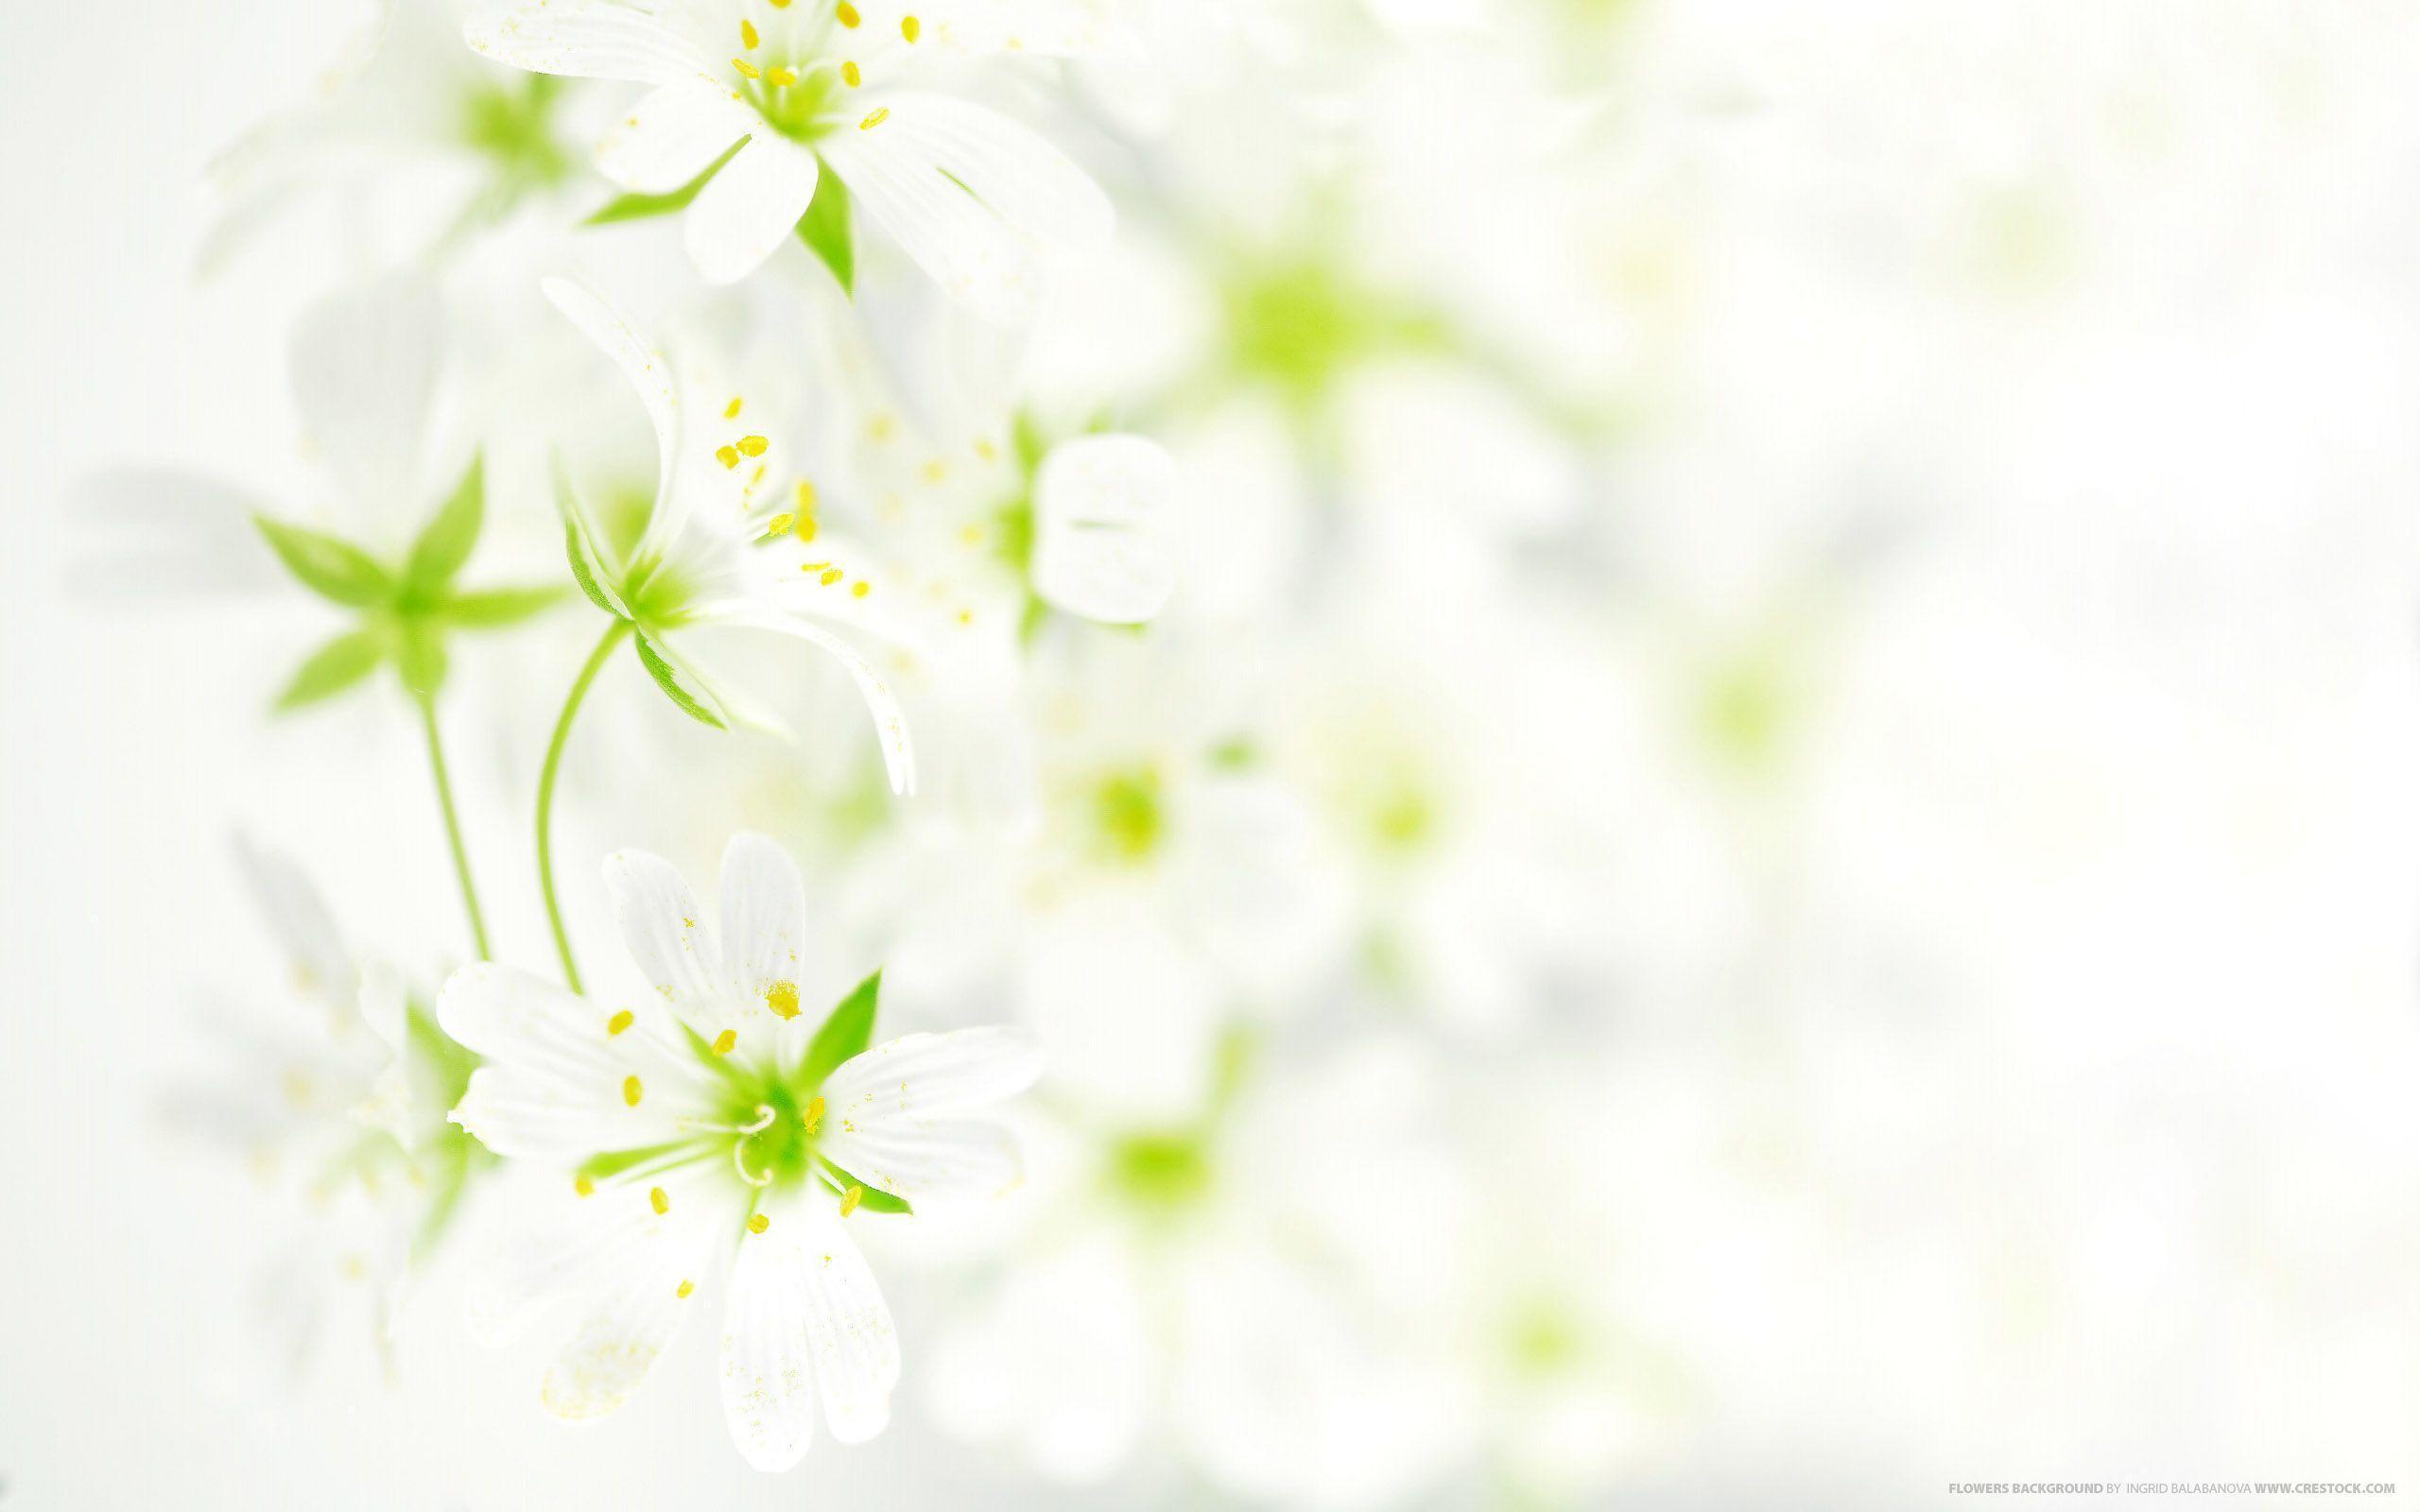 Flower Image With White Background Wallpaper. ForestHDWallpaper